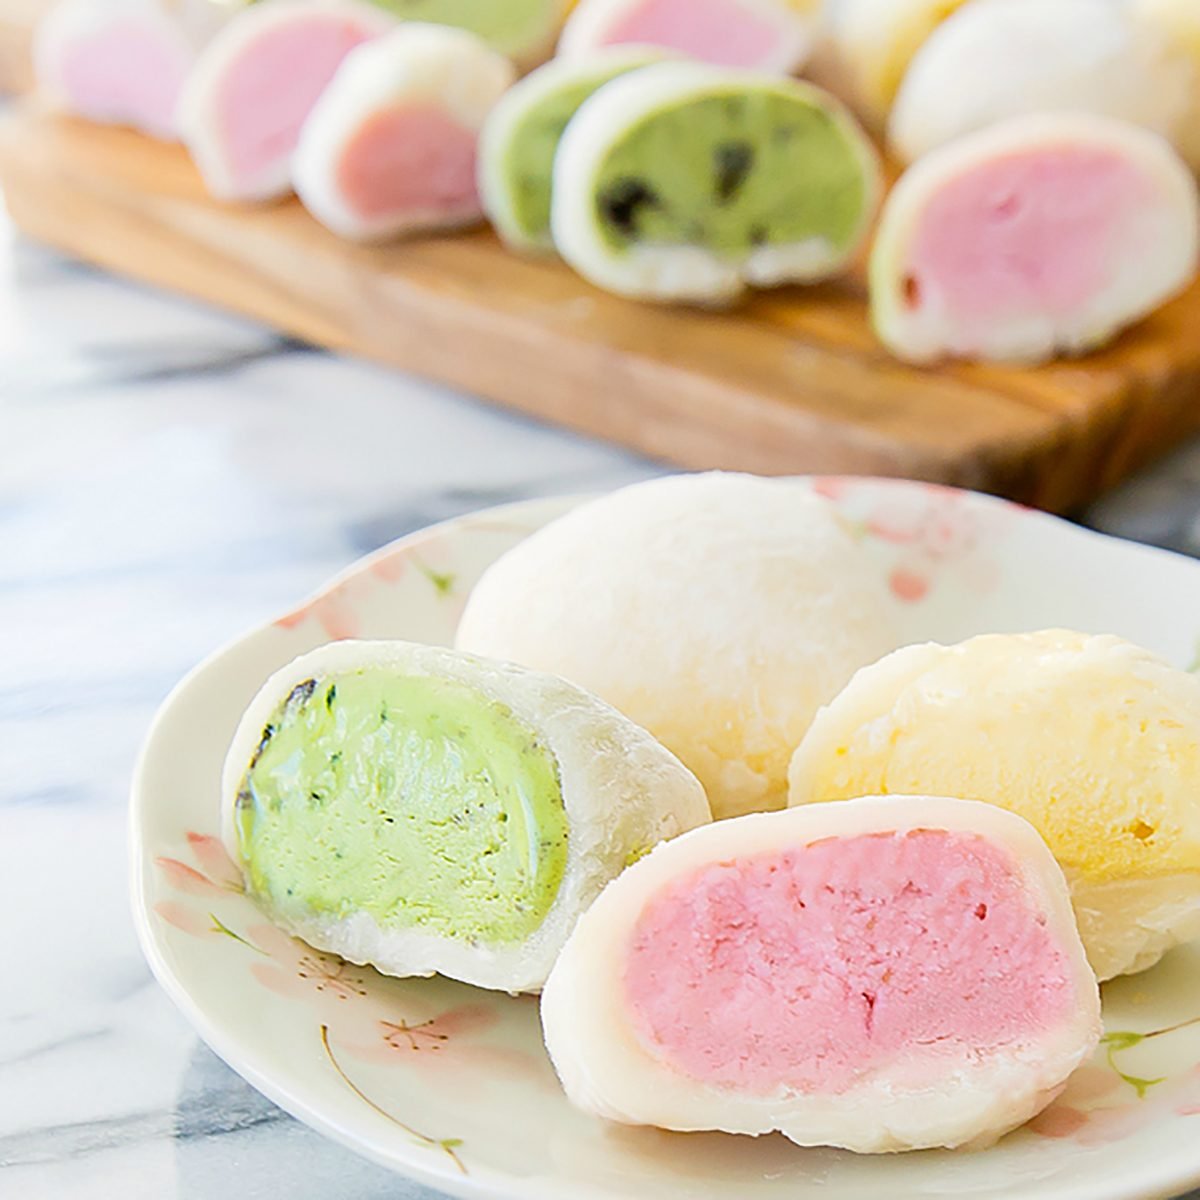 https://www.tasteofhome.com/wp-content/uploads/2018/06/mochi-ice-cream-34.jpg